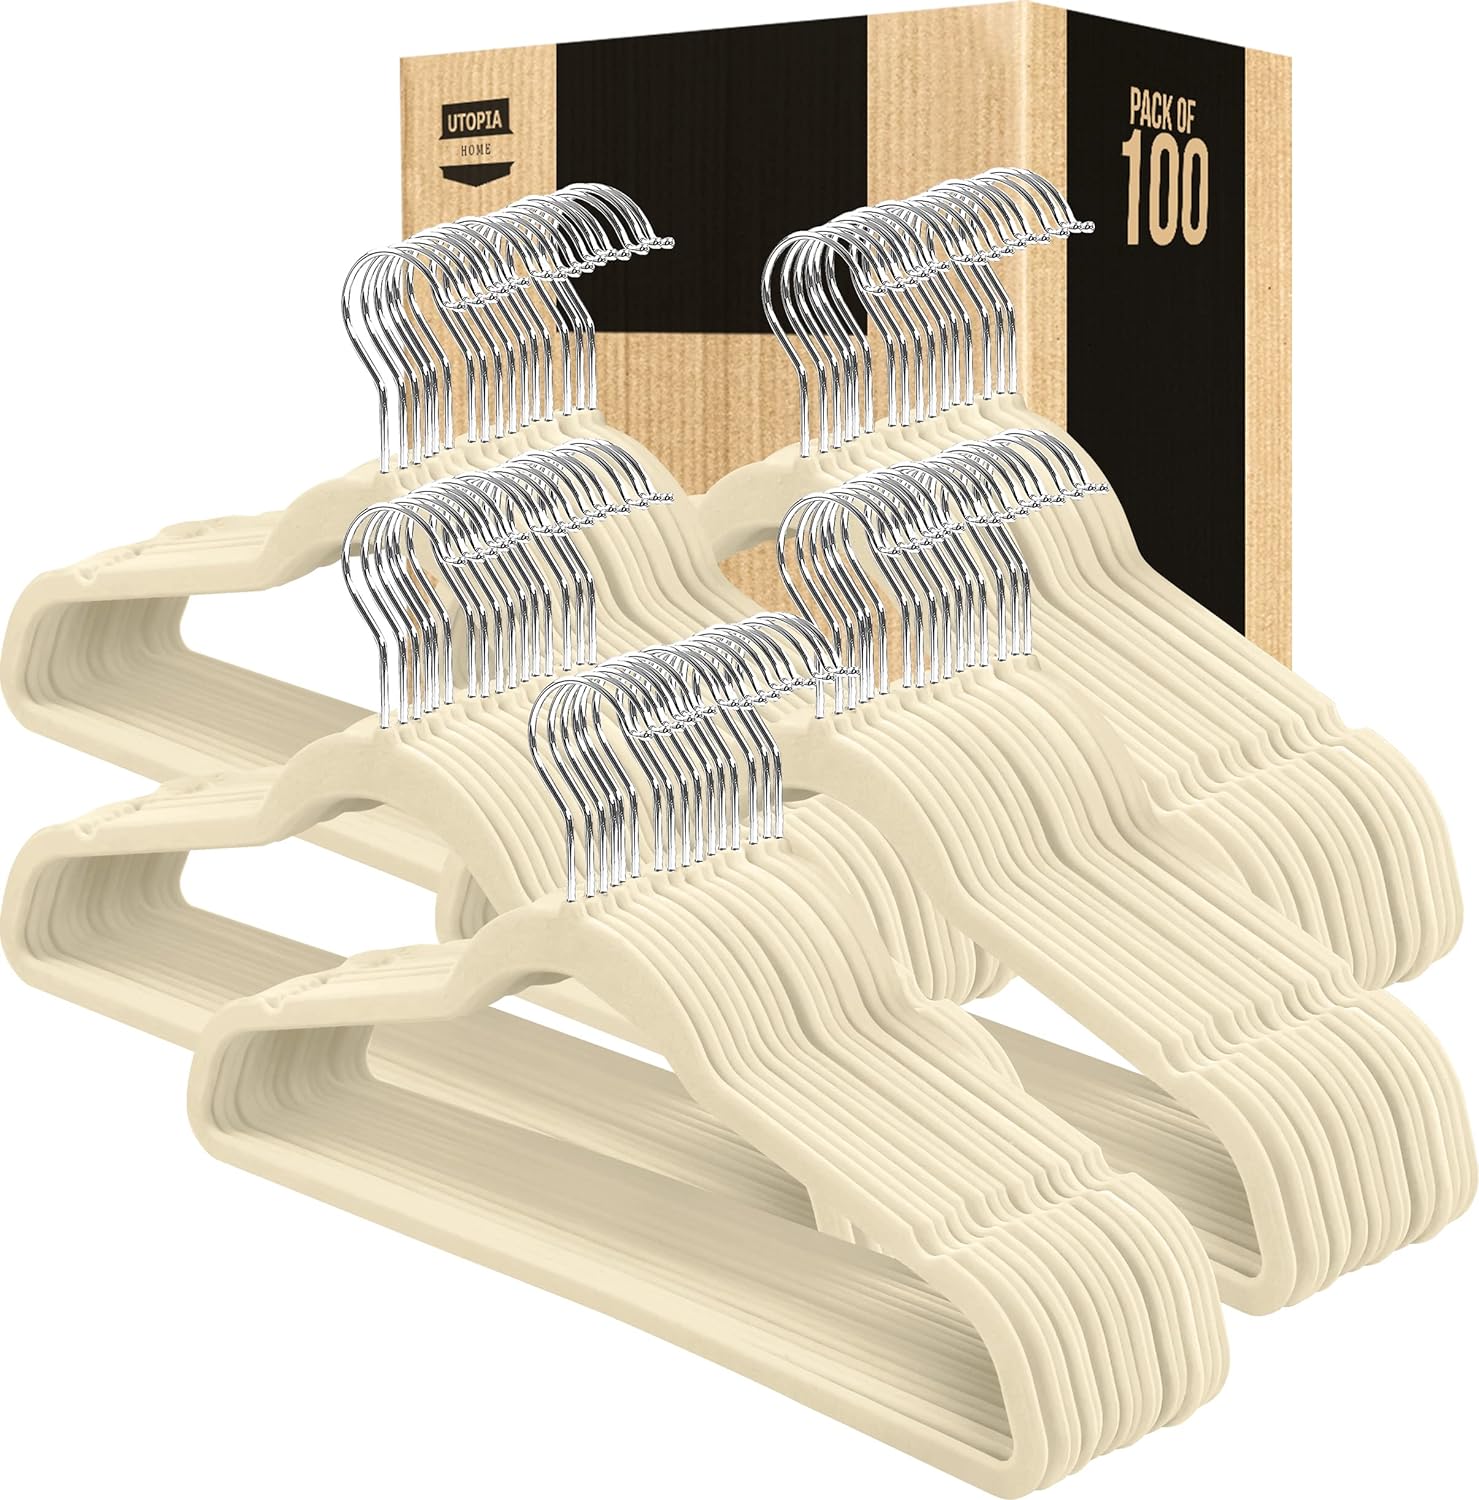 Utopia Home Premium Velvet Hangers 150 Pack - Non-Slip Clothes